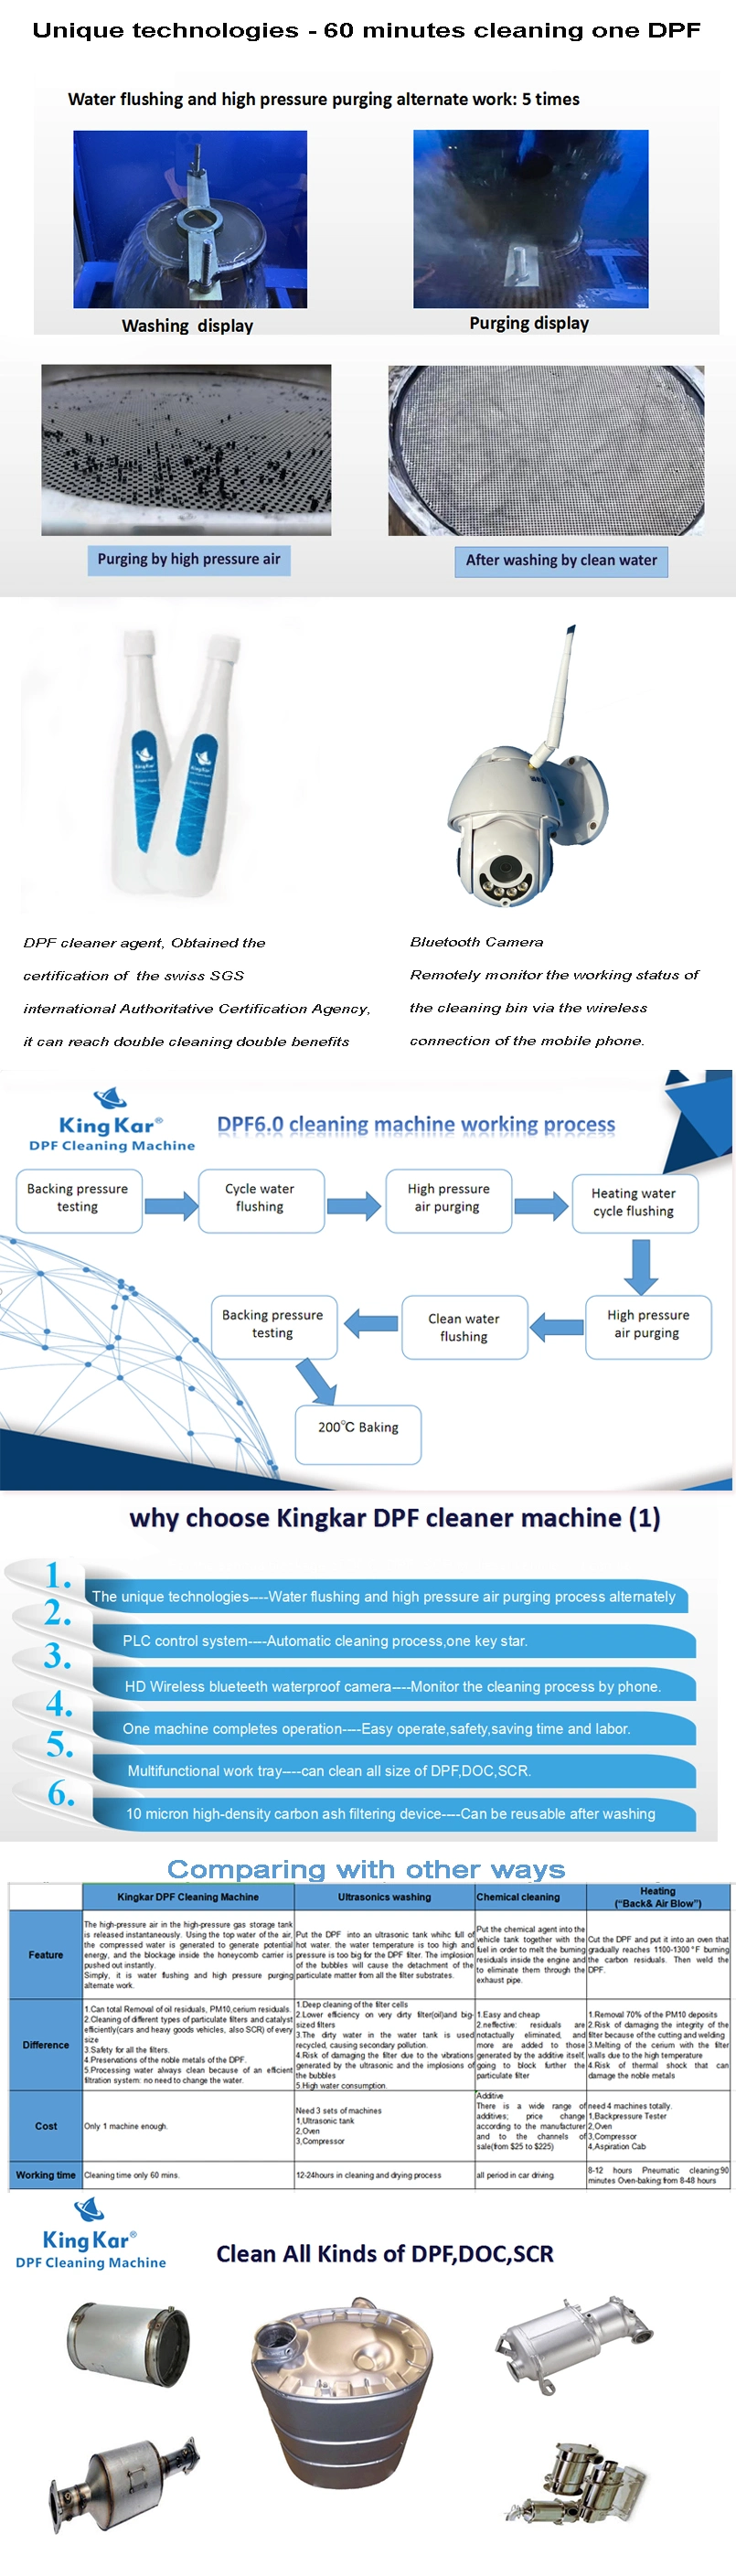 Car Care DPF Clean Diesel Particulate Filter Cleaning Machine